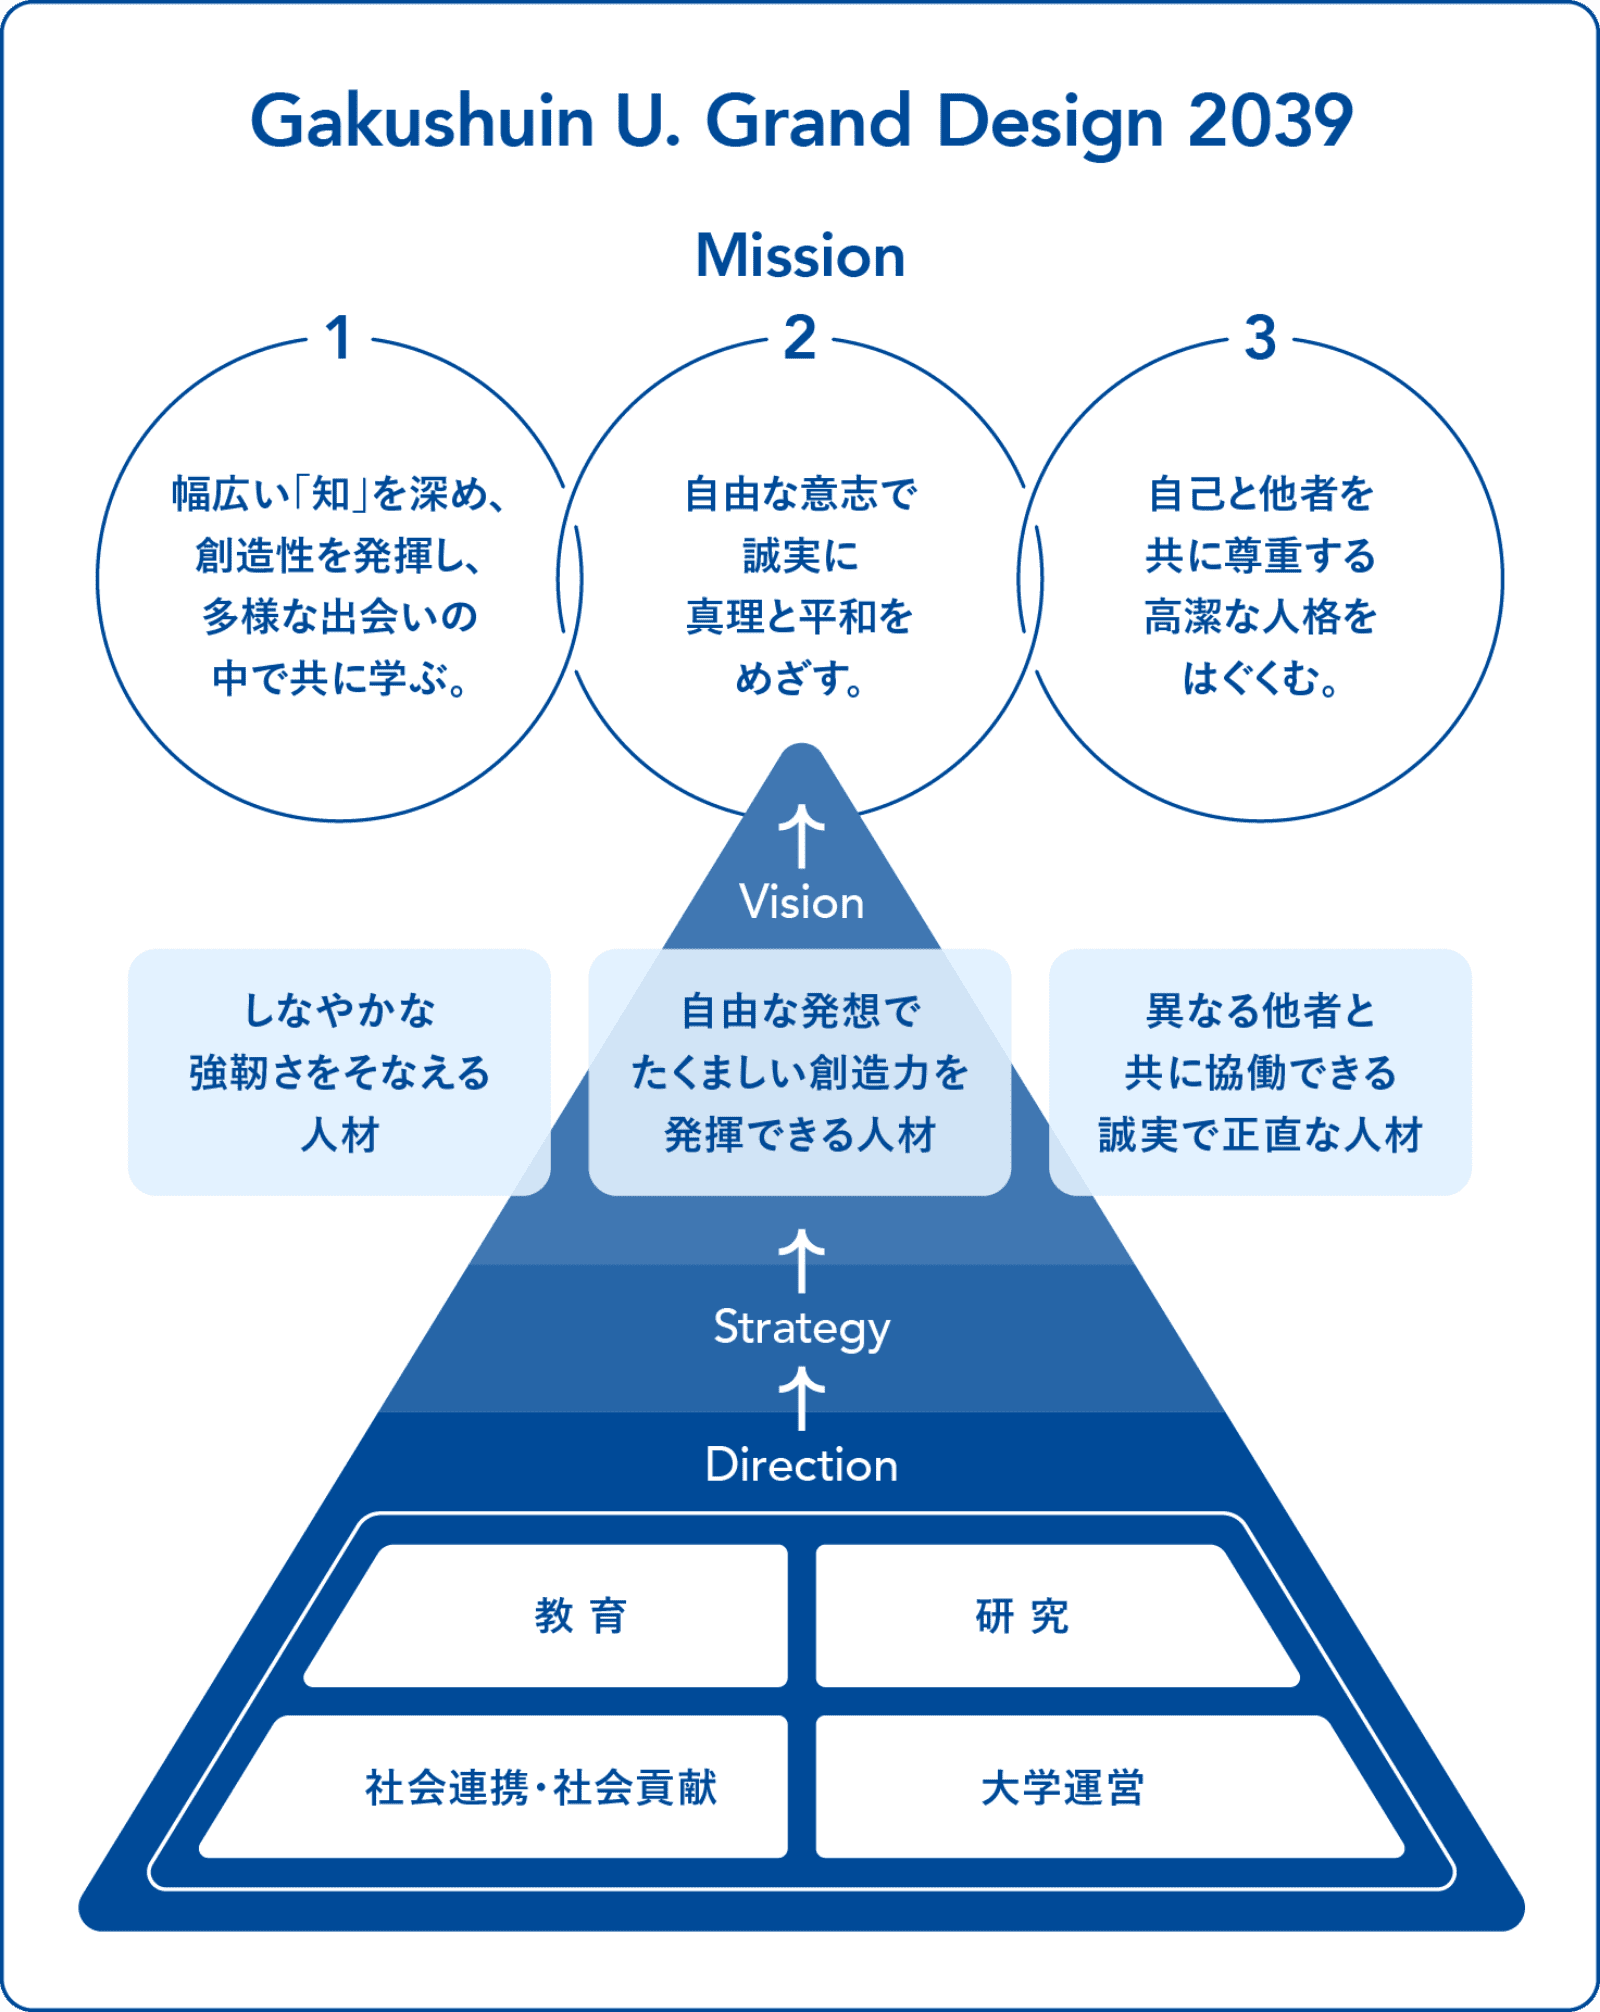 Gakushuin U. Grand Design 2039 Mission